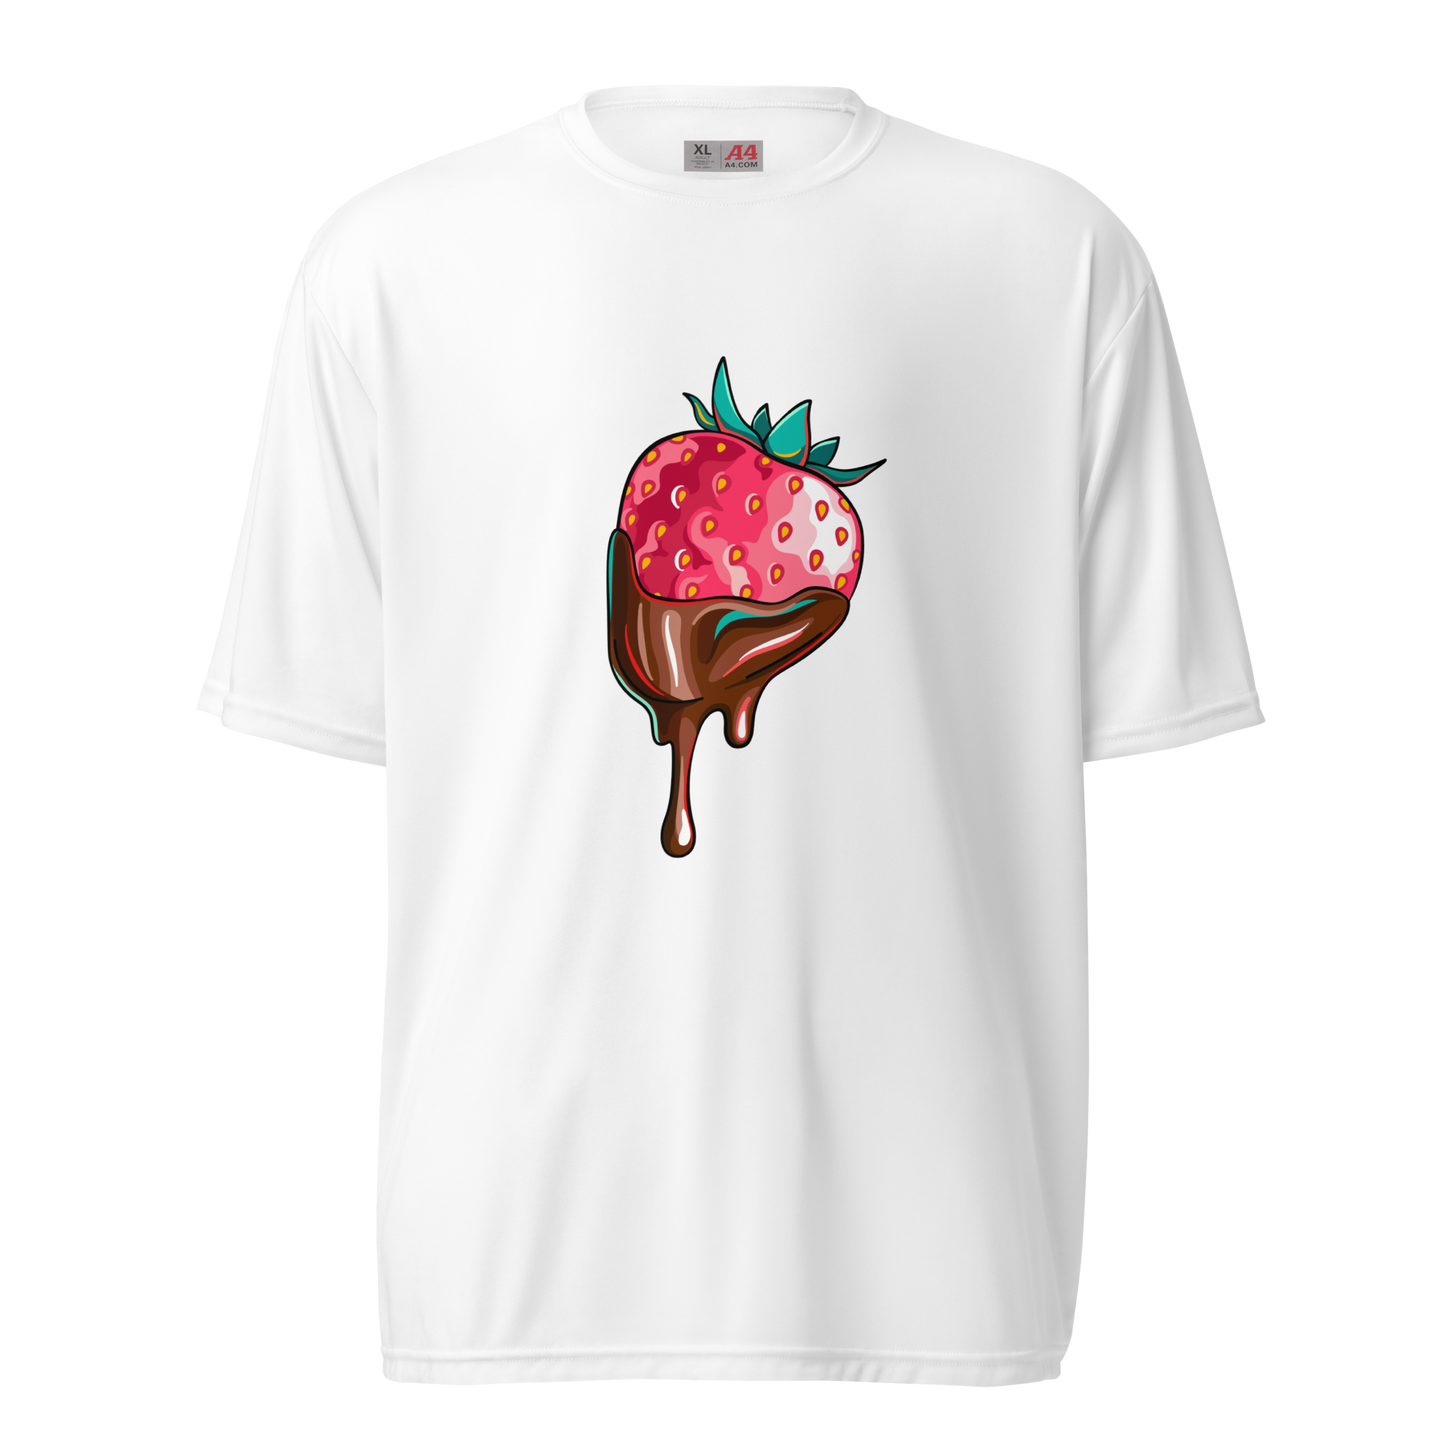 Strawberry Meltdown - Unisex performance crew neck t-shirt